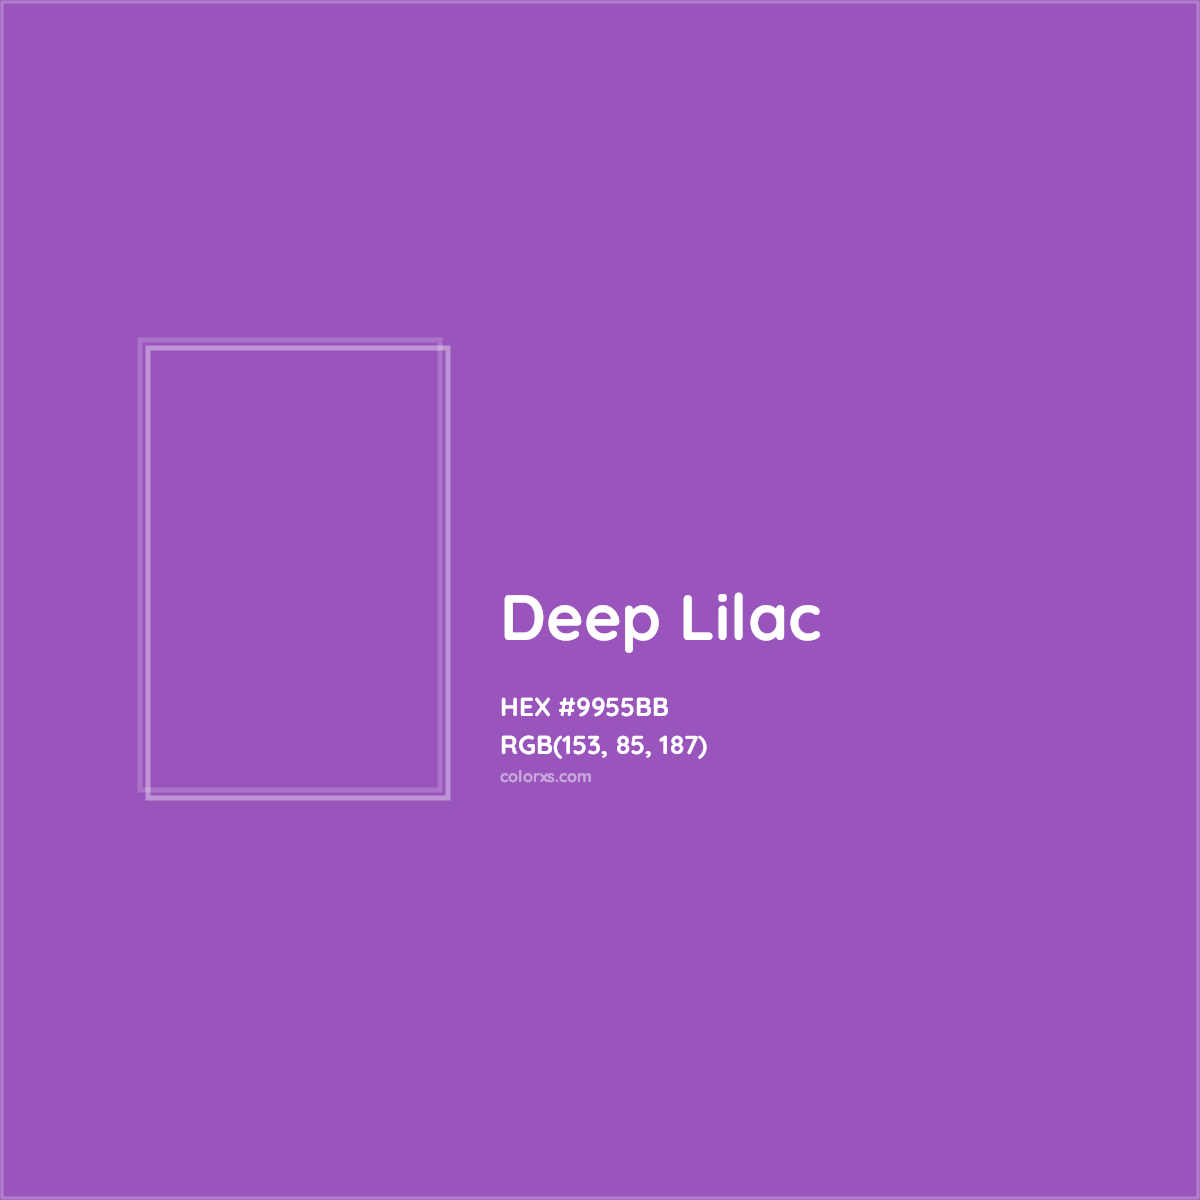 HEX #9955BB Deep Lilac Color - Color Code